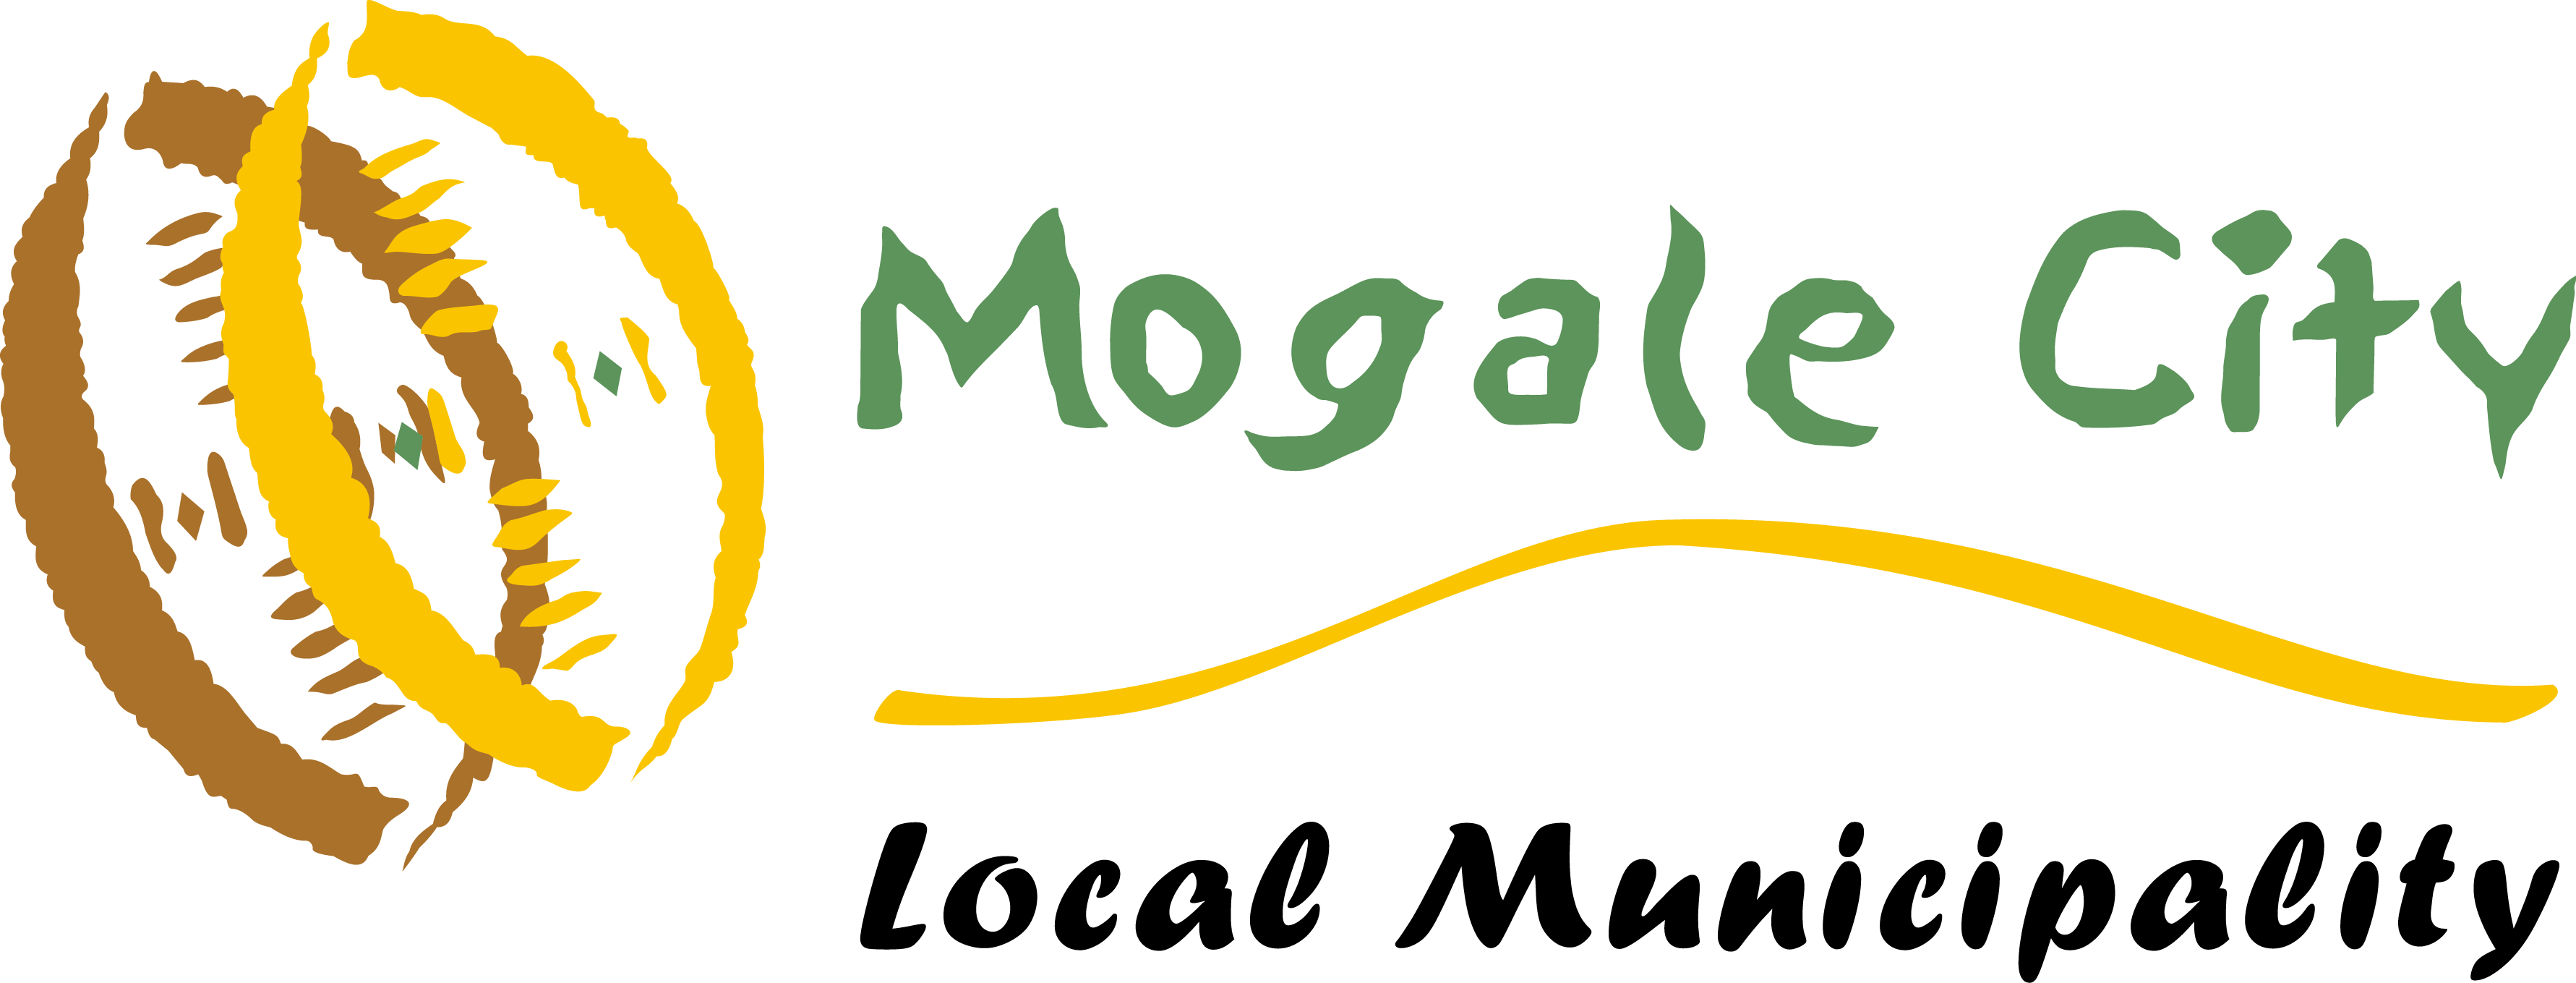 Mogale_City_logo